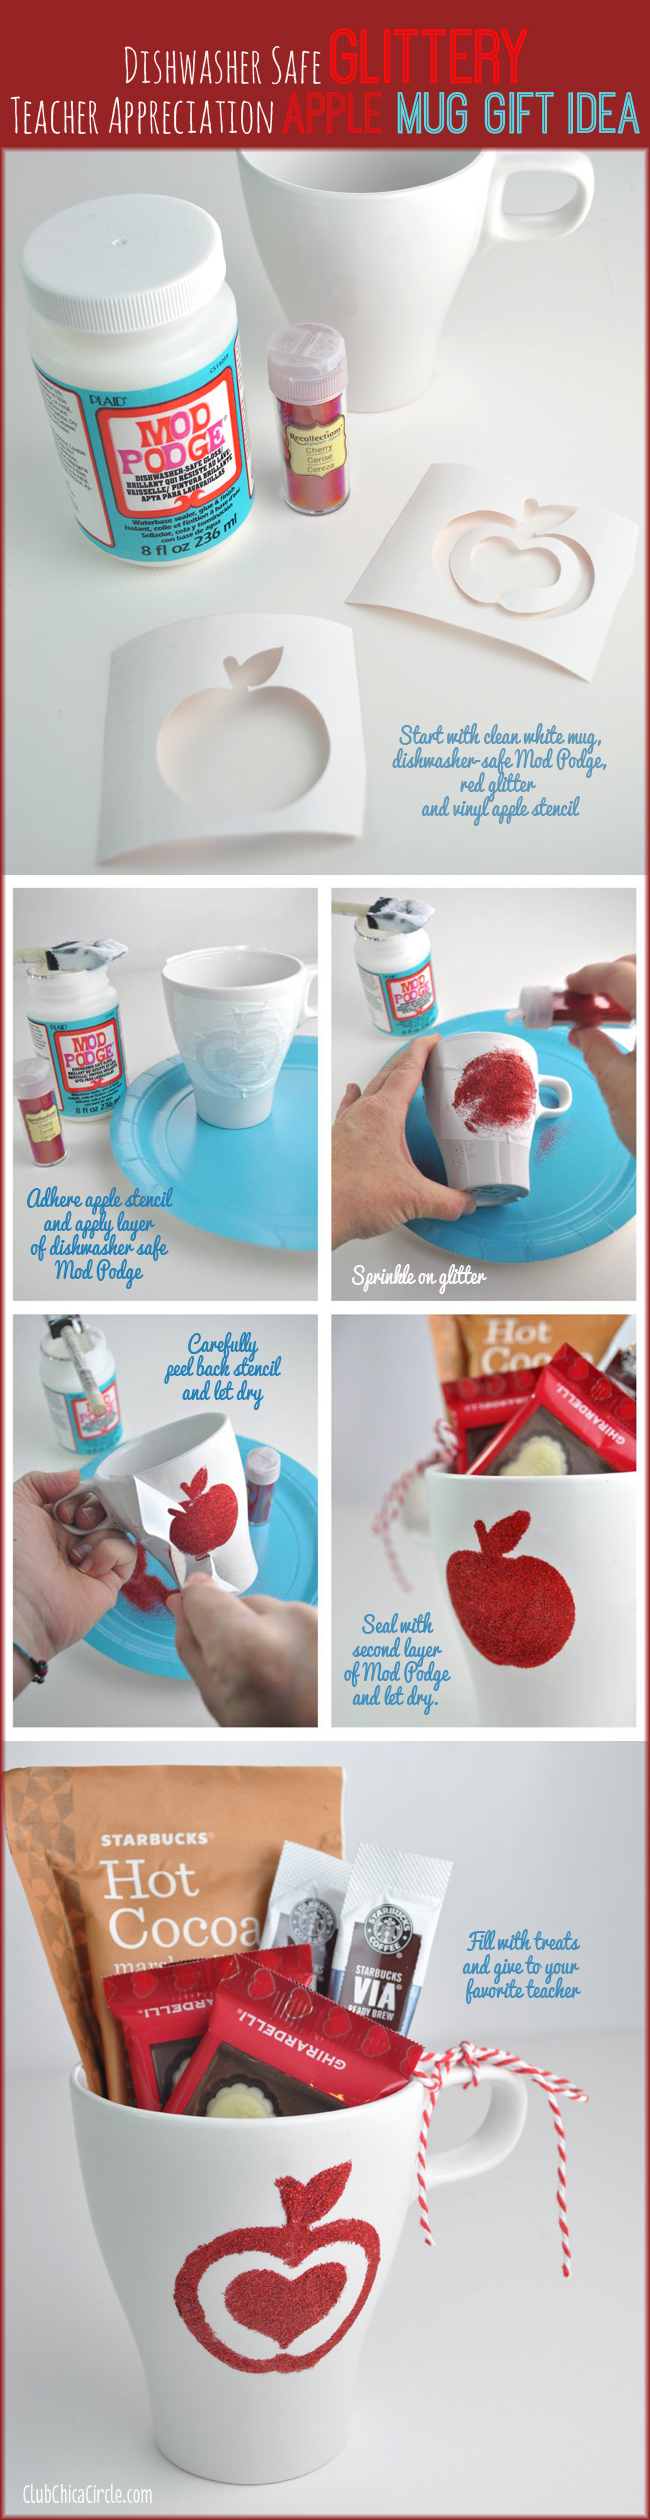 Dishwasher Safe Glittery Mod Podge Teacher Appreciation Mug Gift Idea and Craft